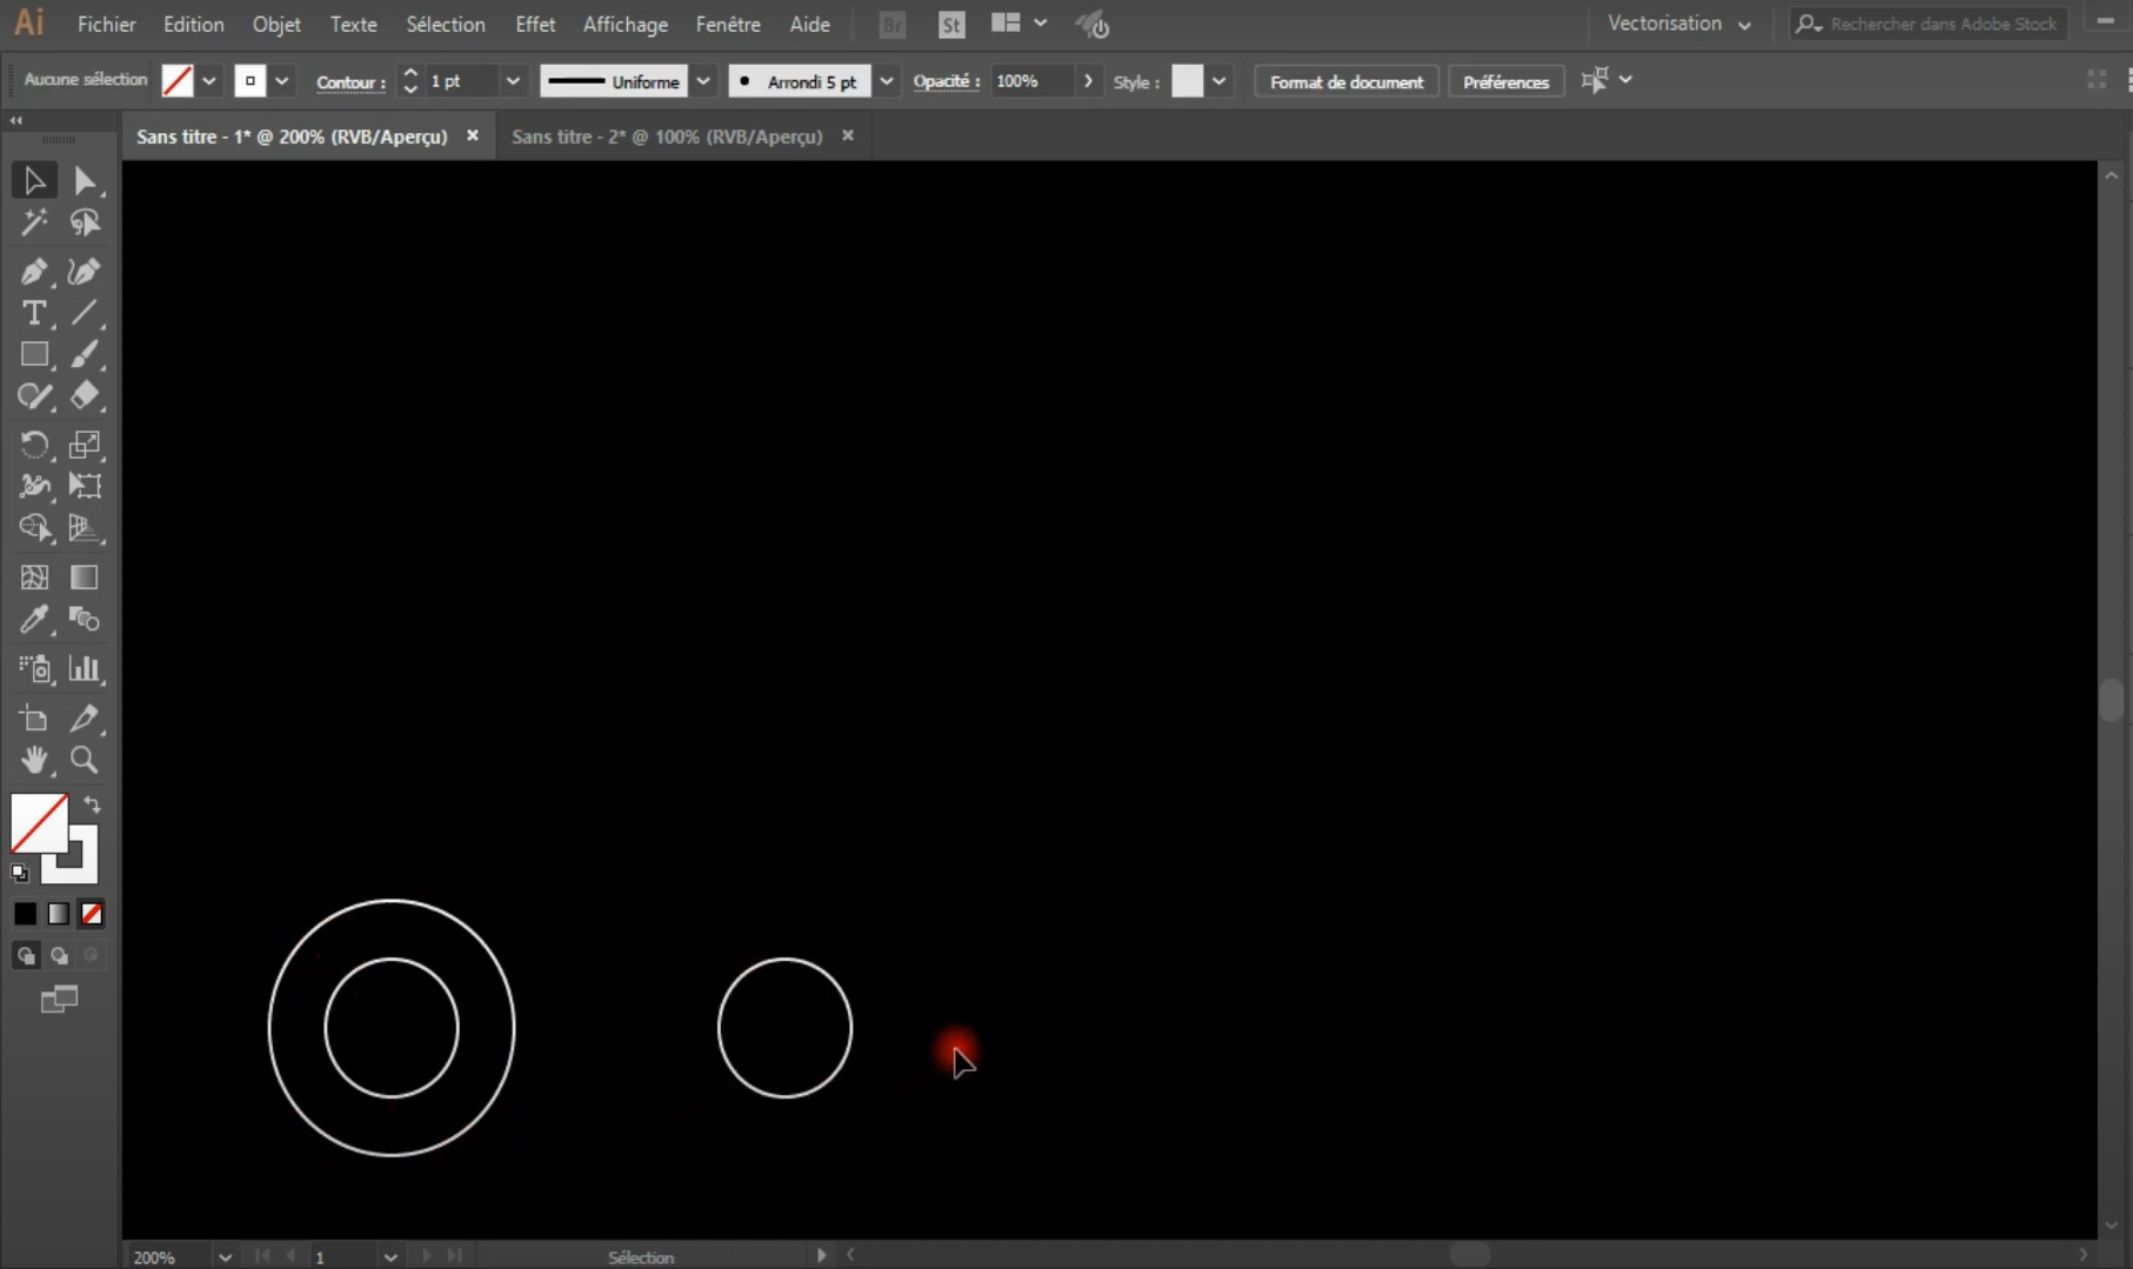 Running Adobe Illustrator on Windows 10